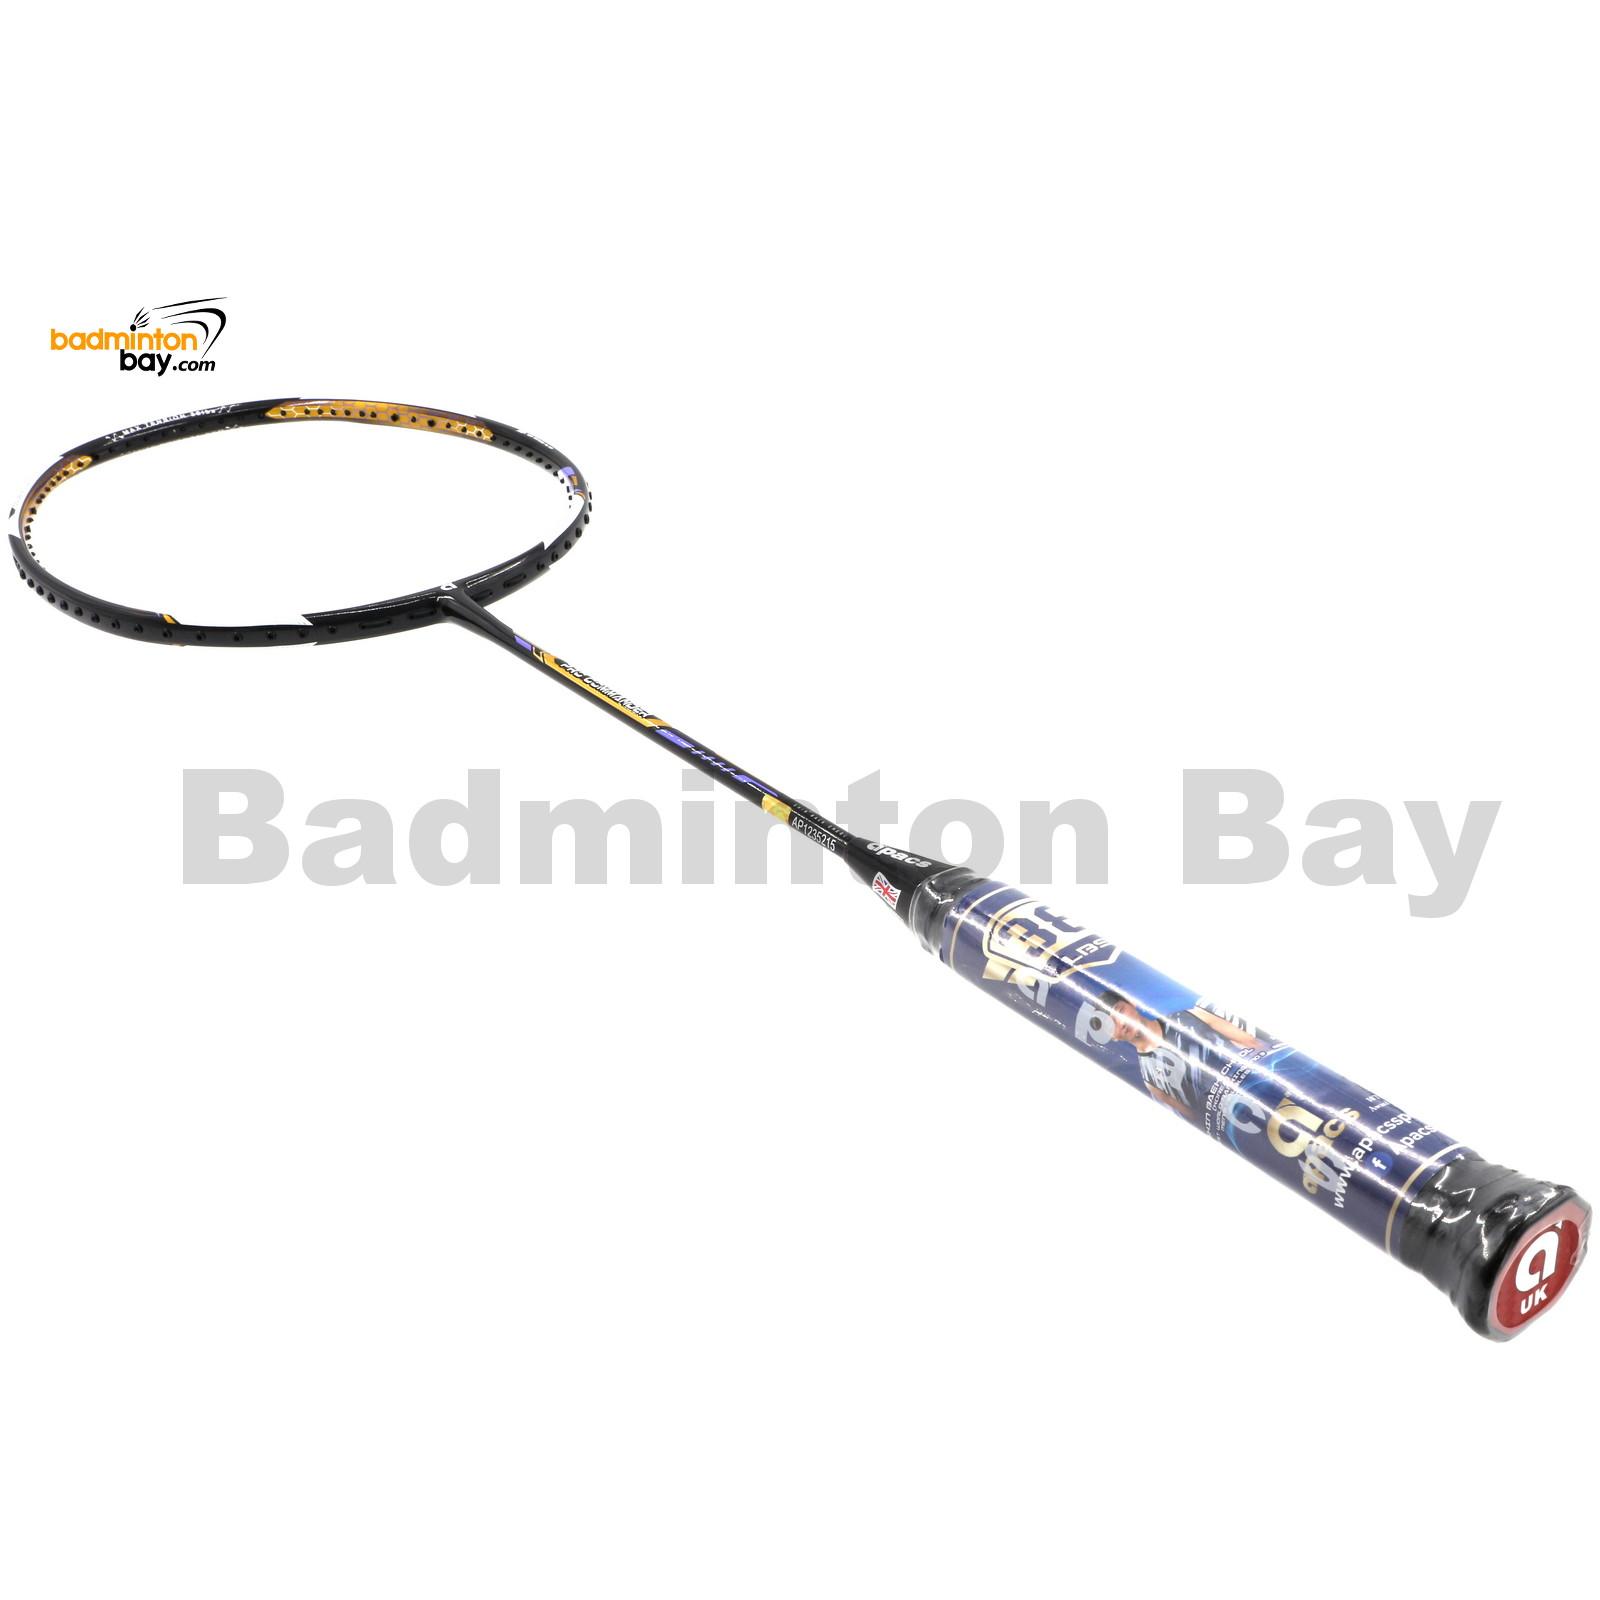 Apacs Pro Commander Badminton Racket (4U)